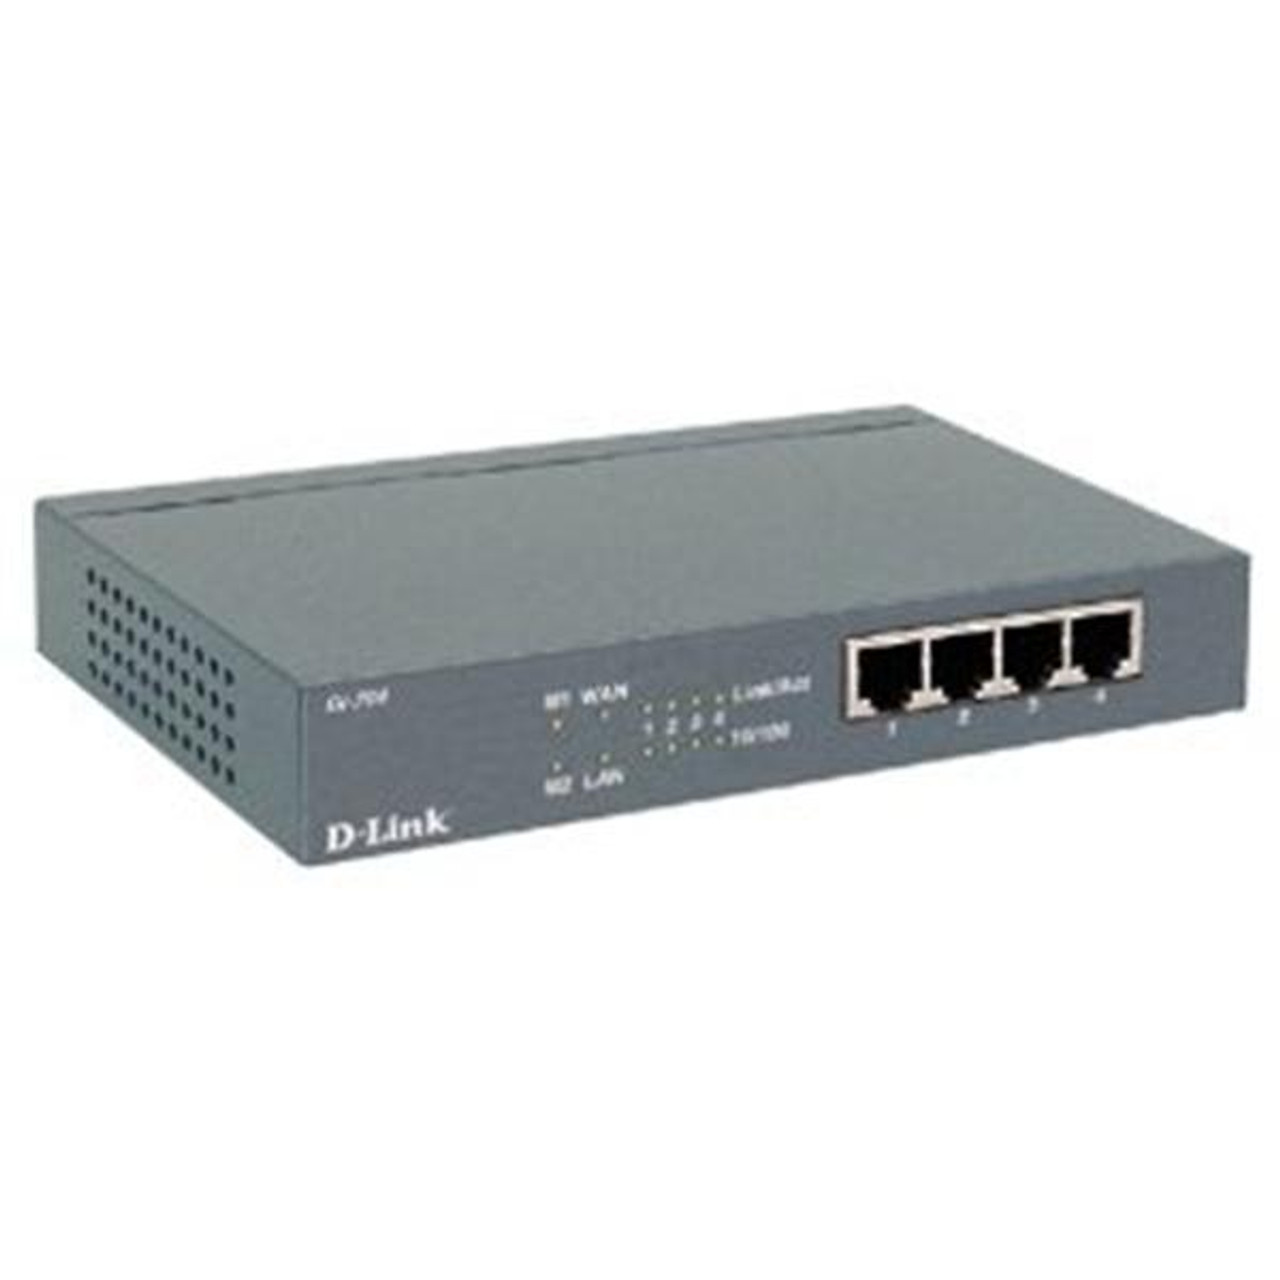 DI-704 D-Link Cable/DSL Internet Gateway 6 Ports (Refurbished)